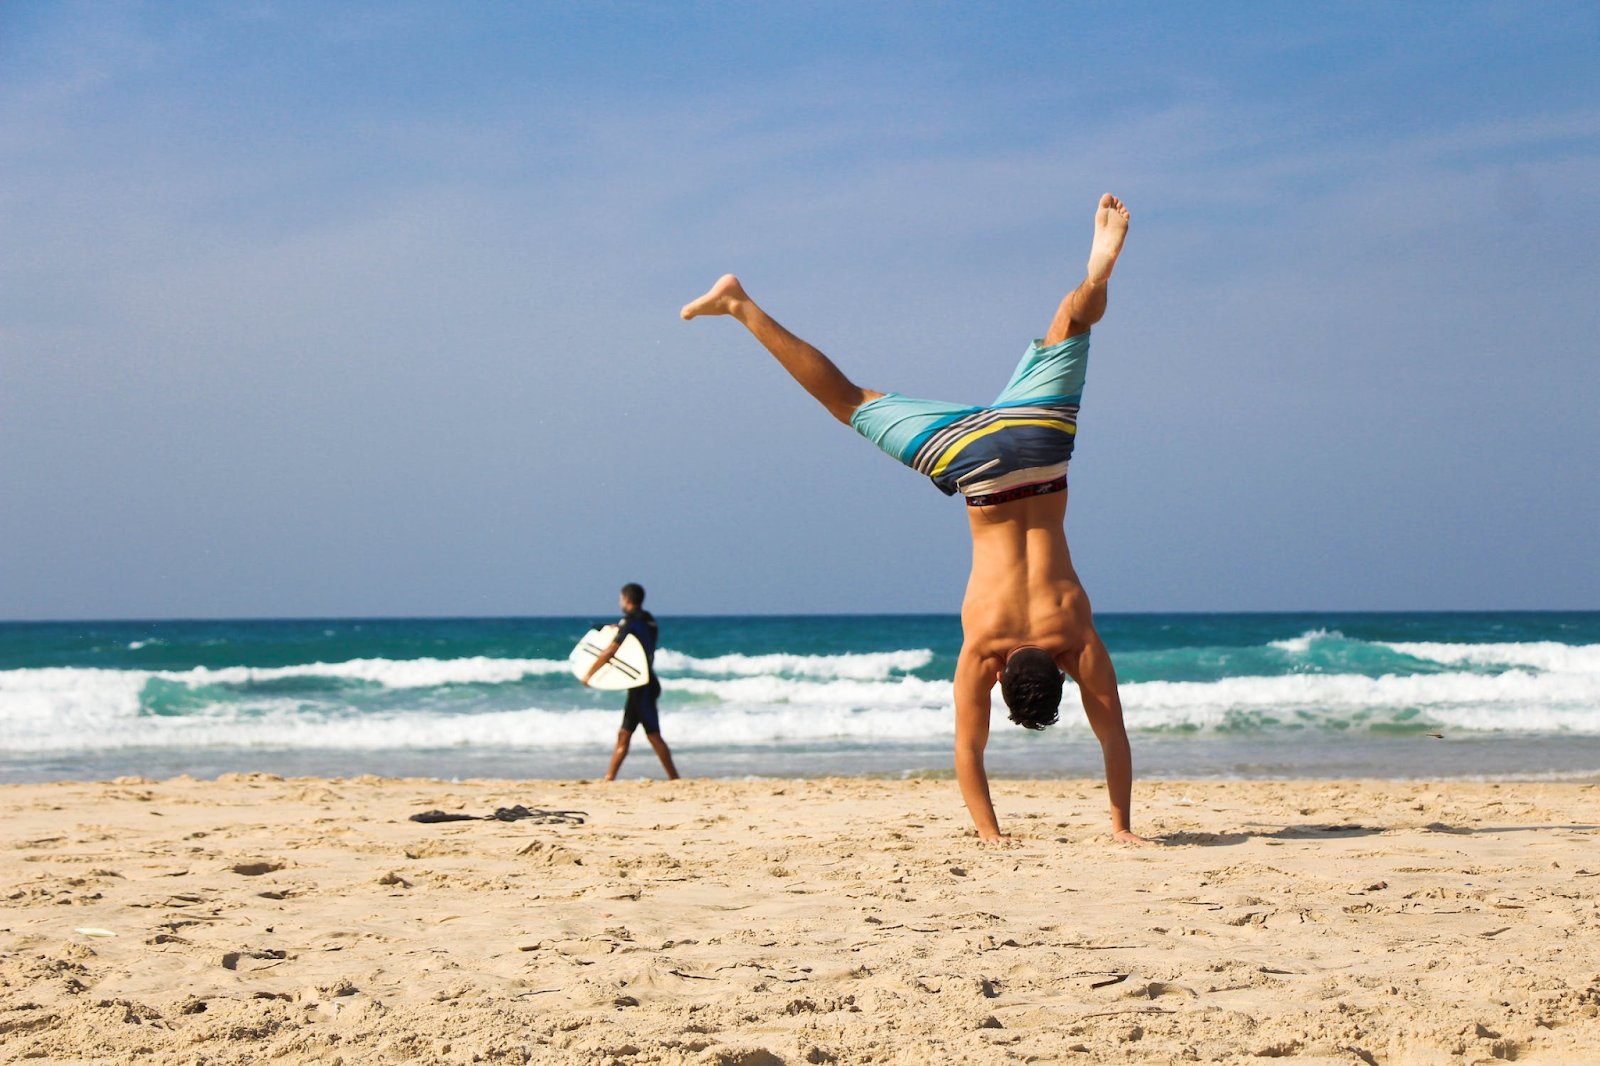 Man Doing Cartwheel at the Beach